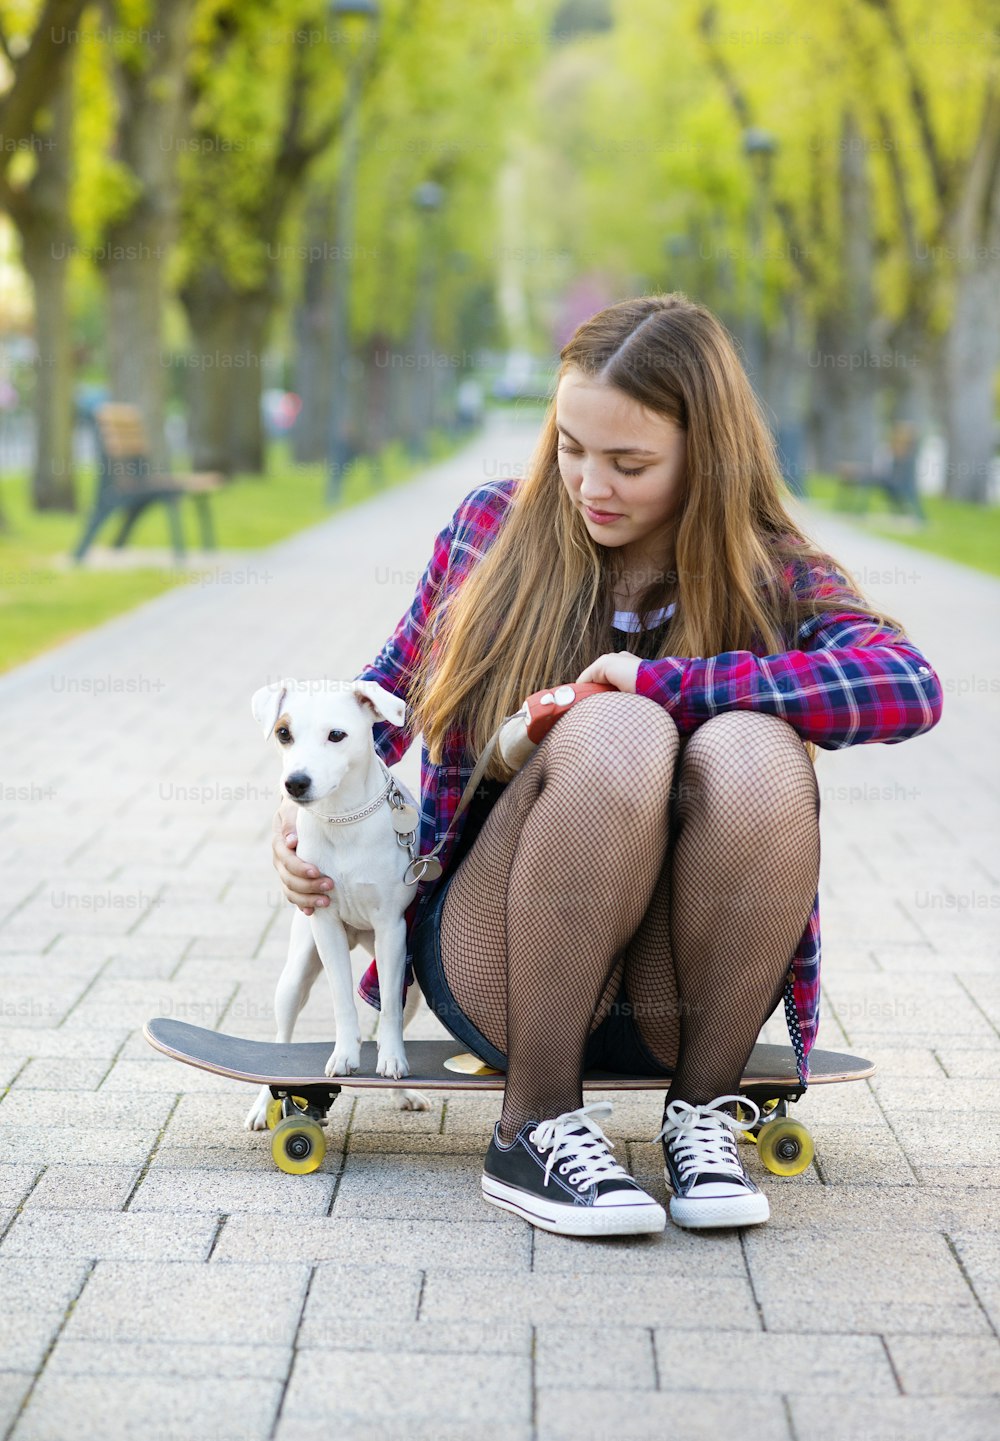 Teenage girl on skateboard with her dog